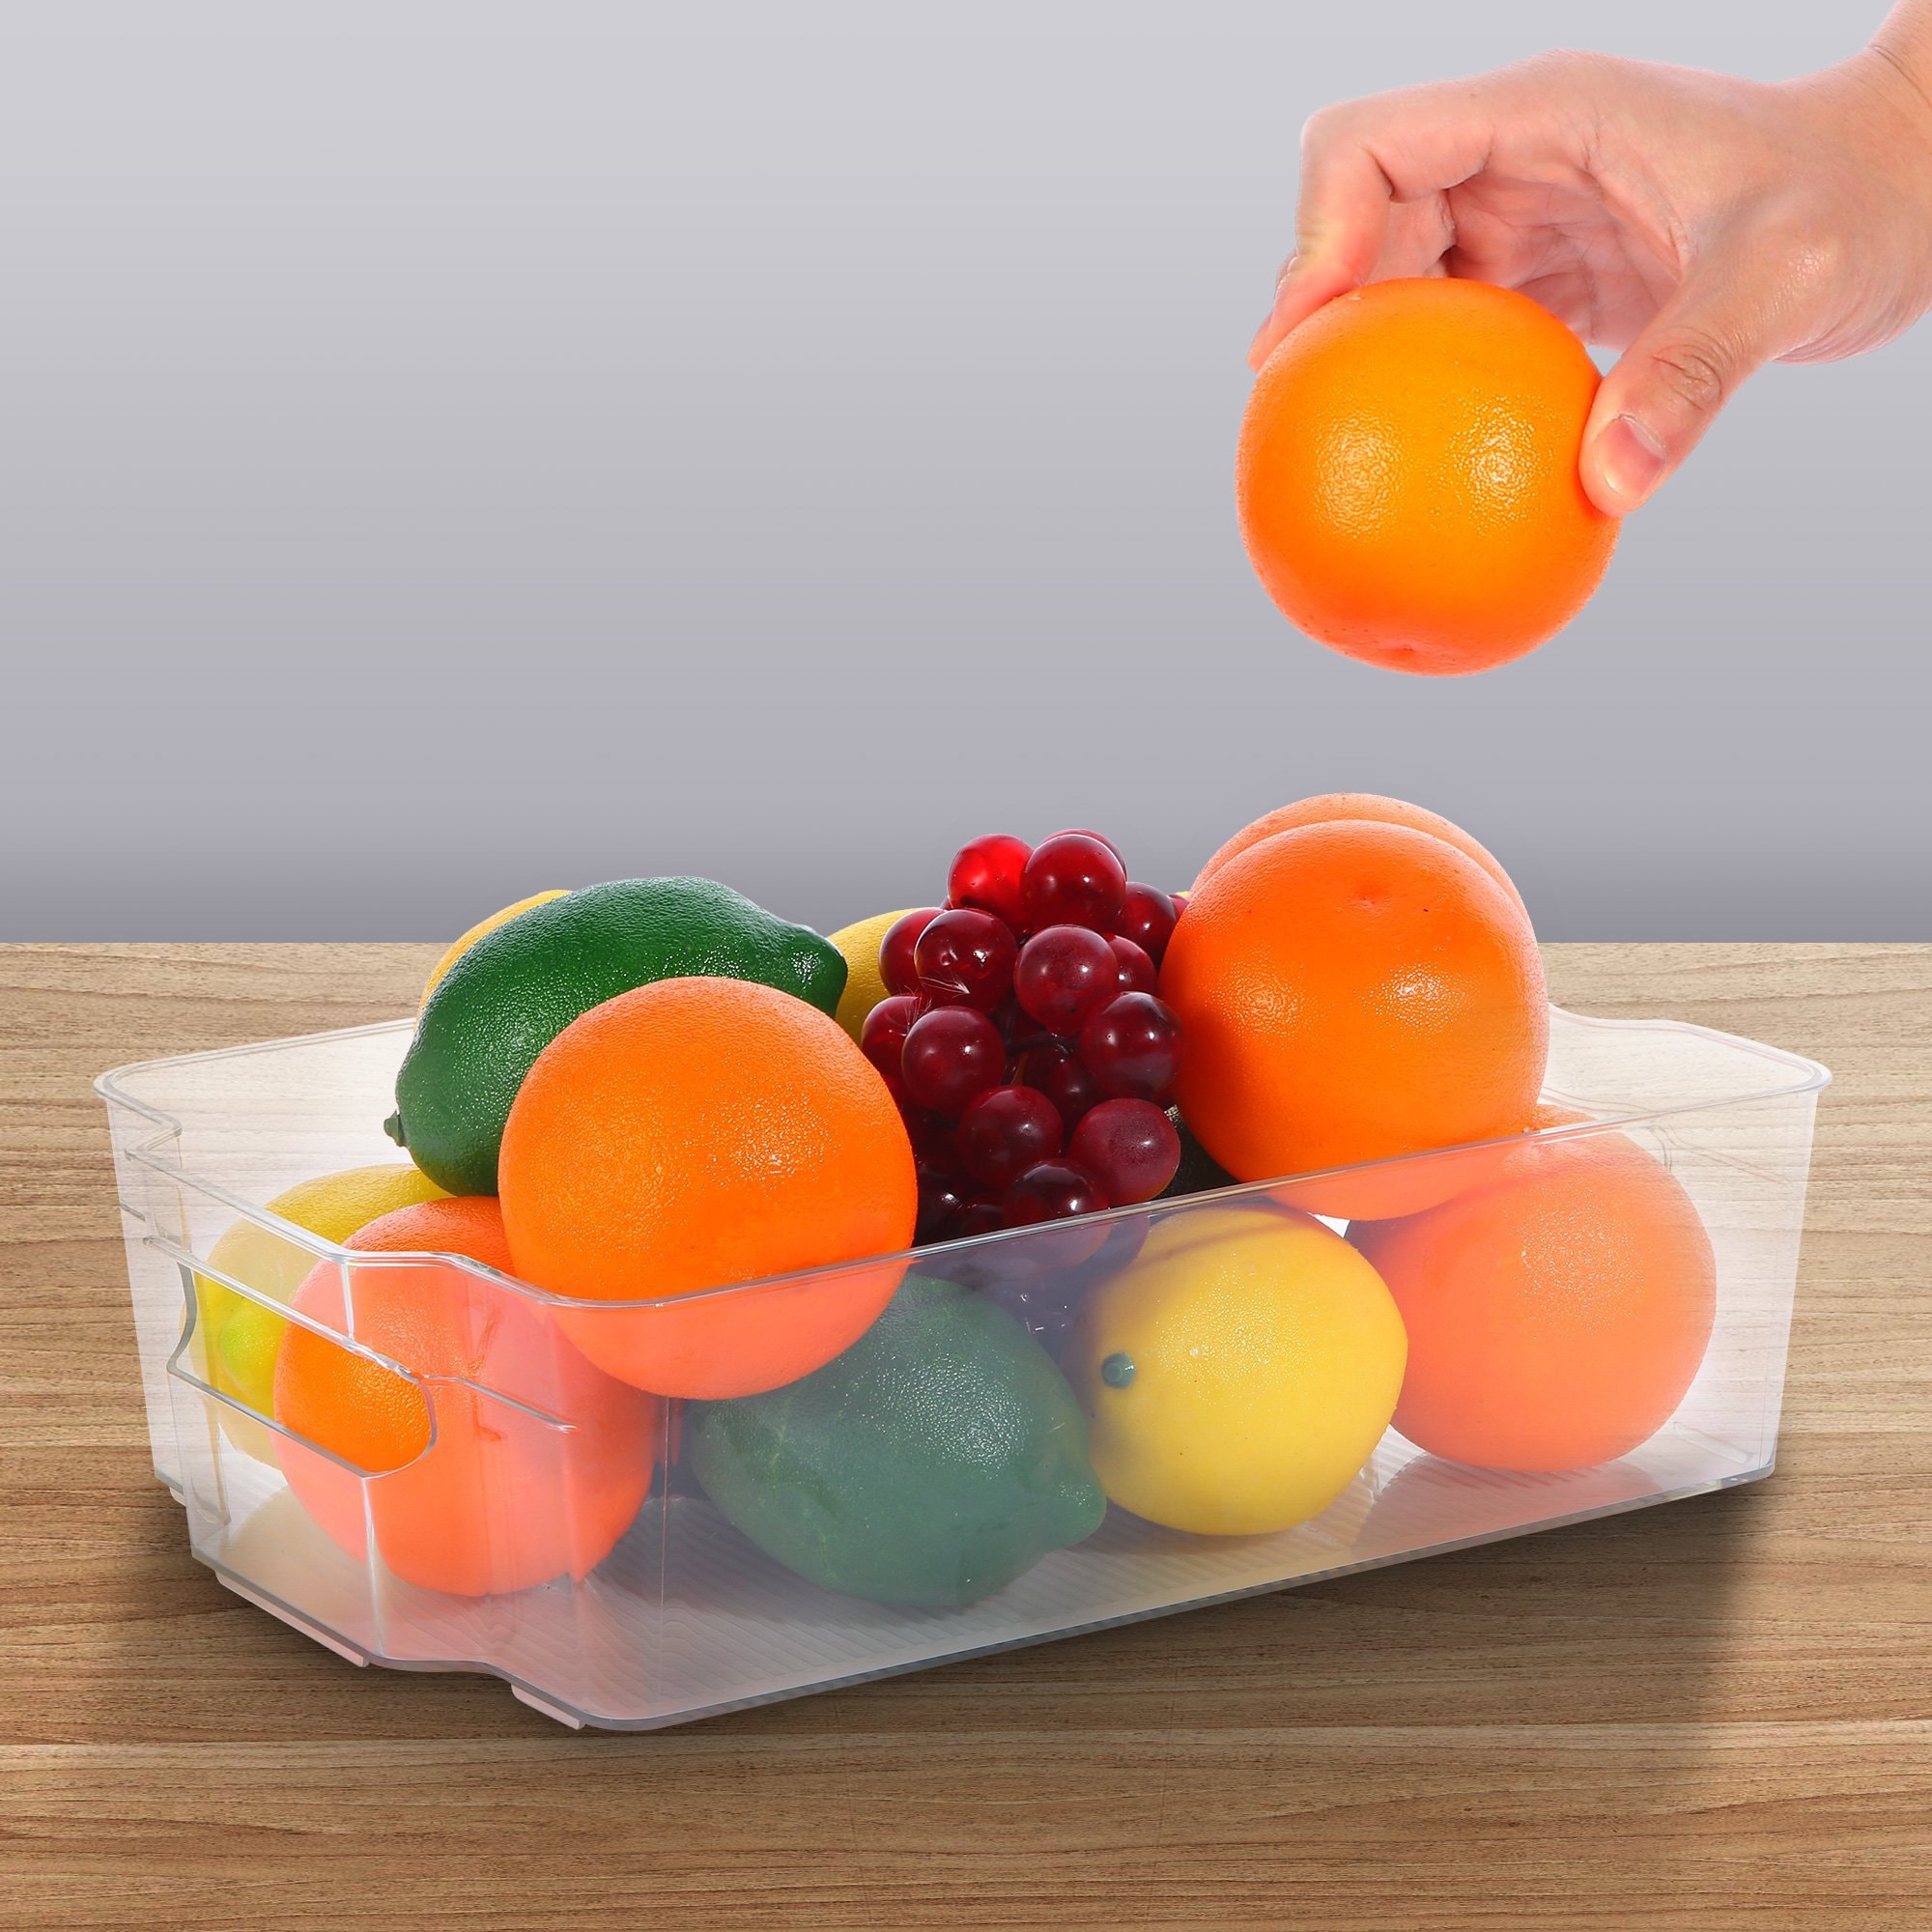 ROSELIFE 蔬菜水果分类厨房冰箱收纳盒12.6"x8.6"x3.5" 2个装